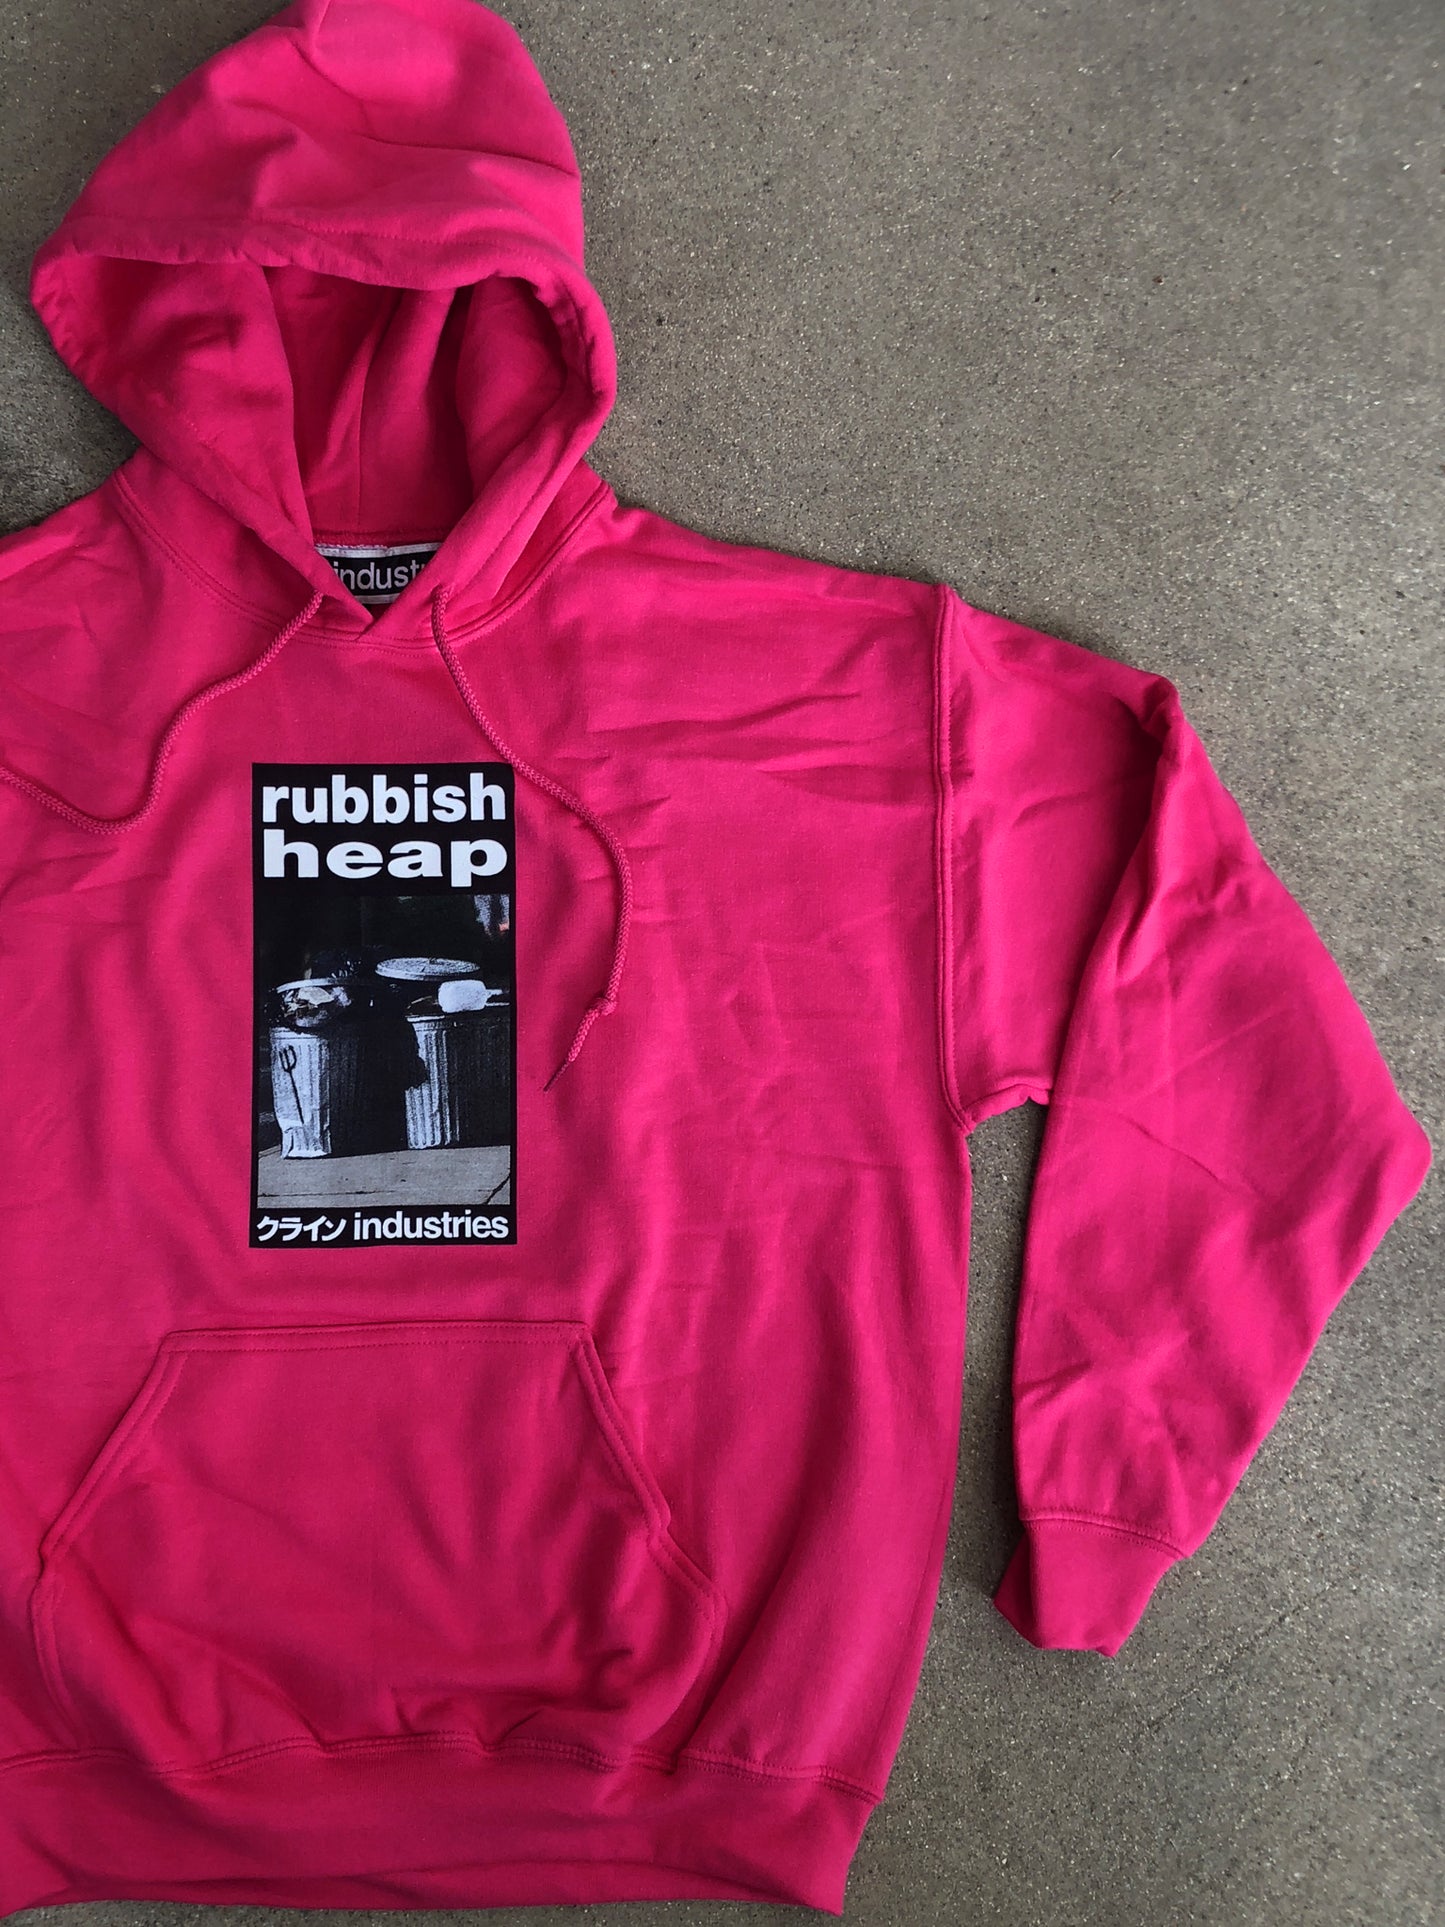 rubbish heap hooded sweatshirt - PINK/HELOCONIA w/ free sticker pack